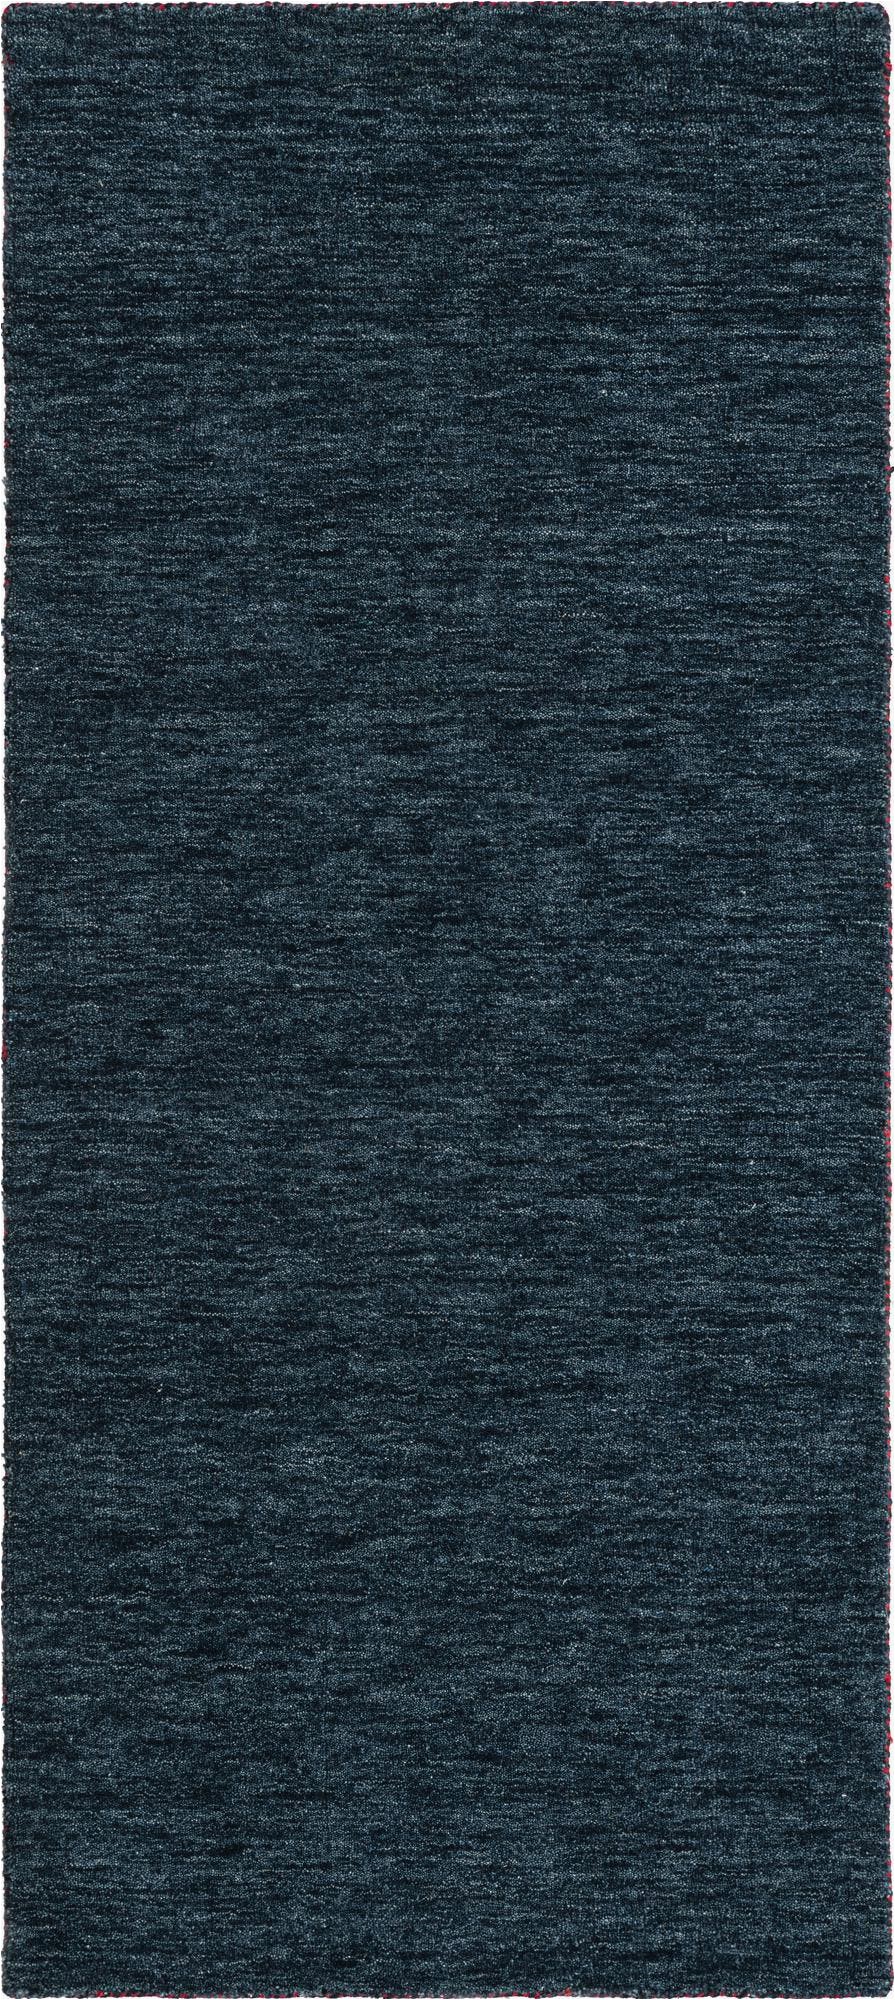 navy blue 6 ft runner solid gabbeh area rug